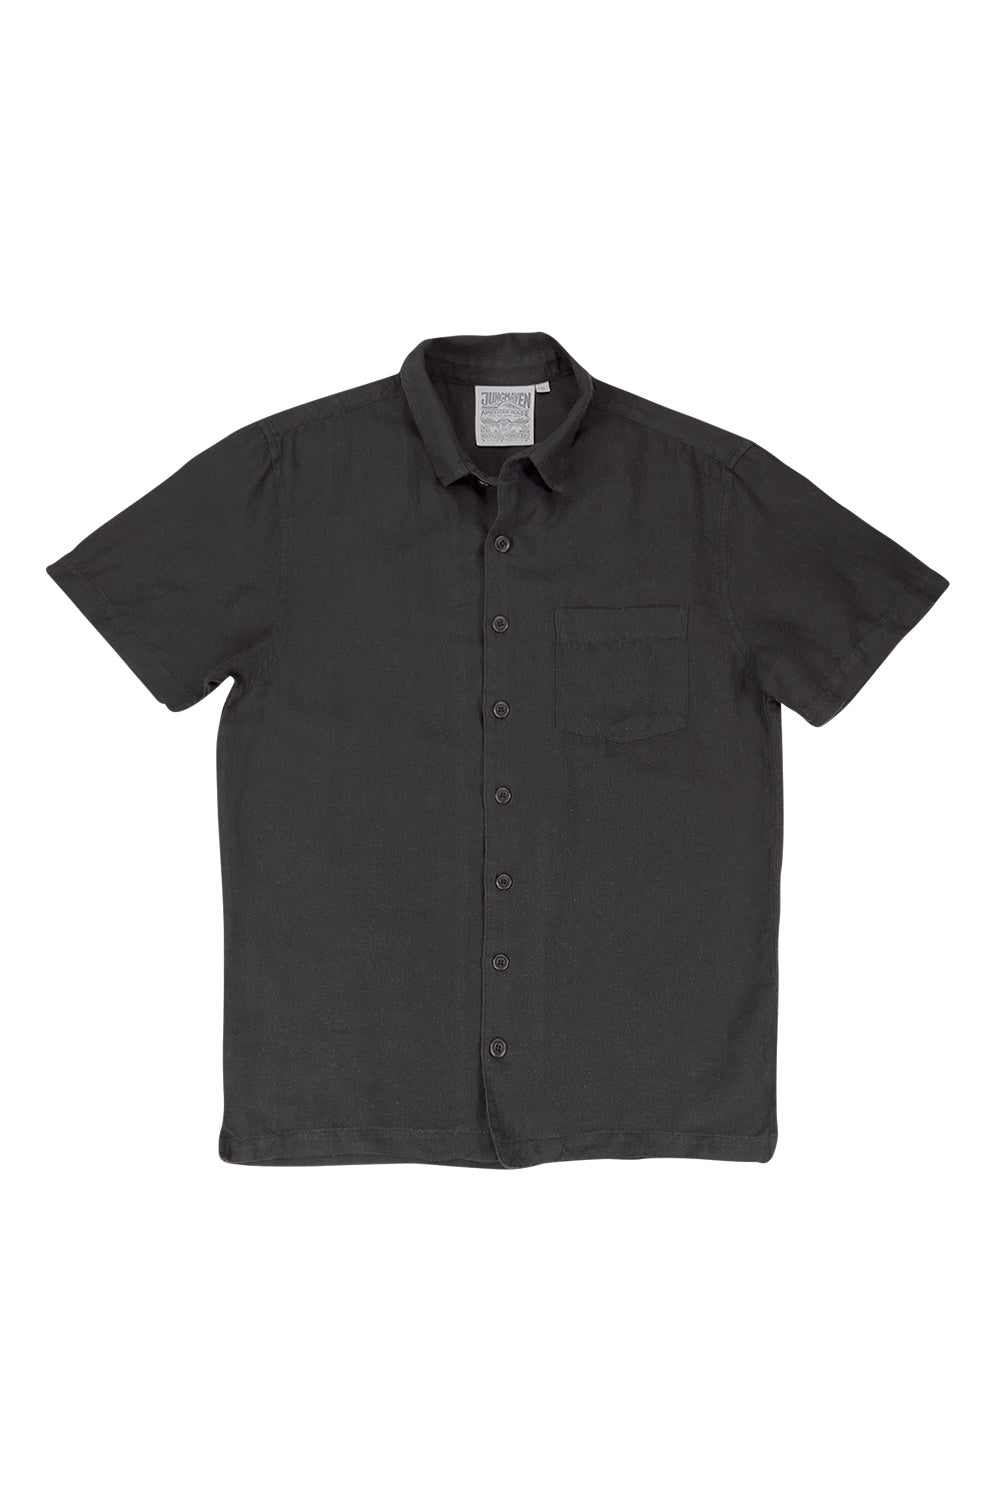 Tornado Shirt | Jungmaven Hemp Clothing & Accessories / Color: Black